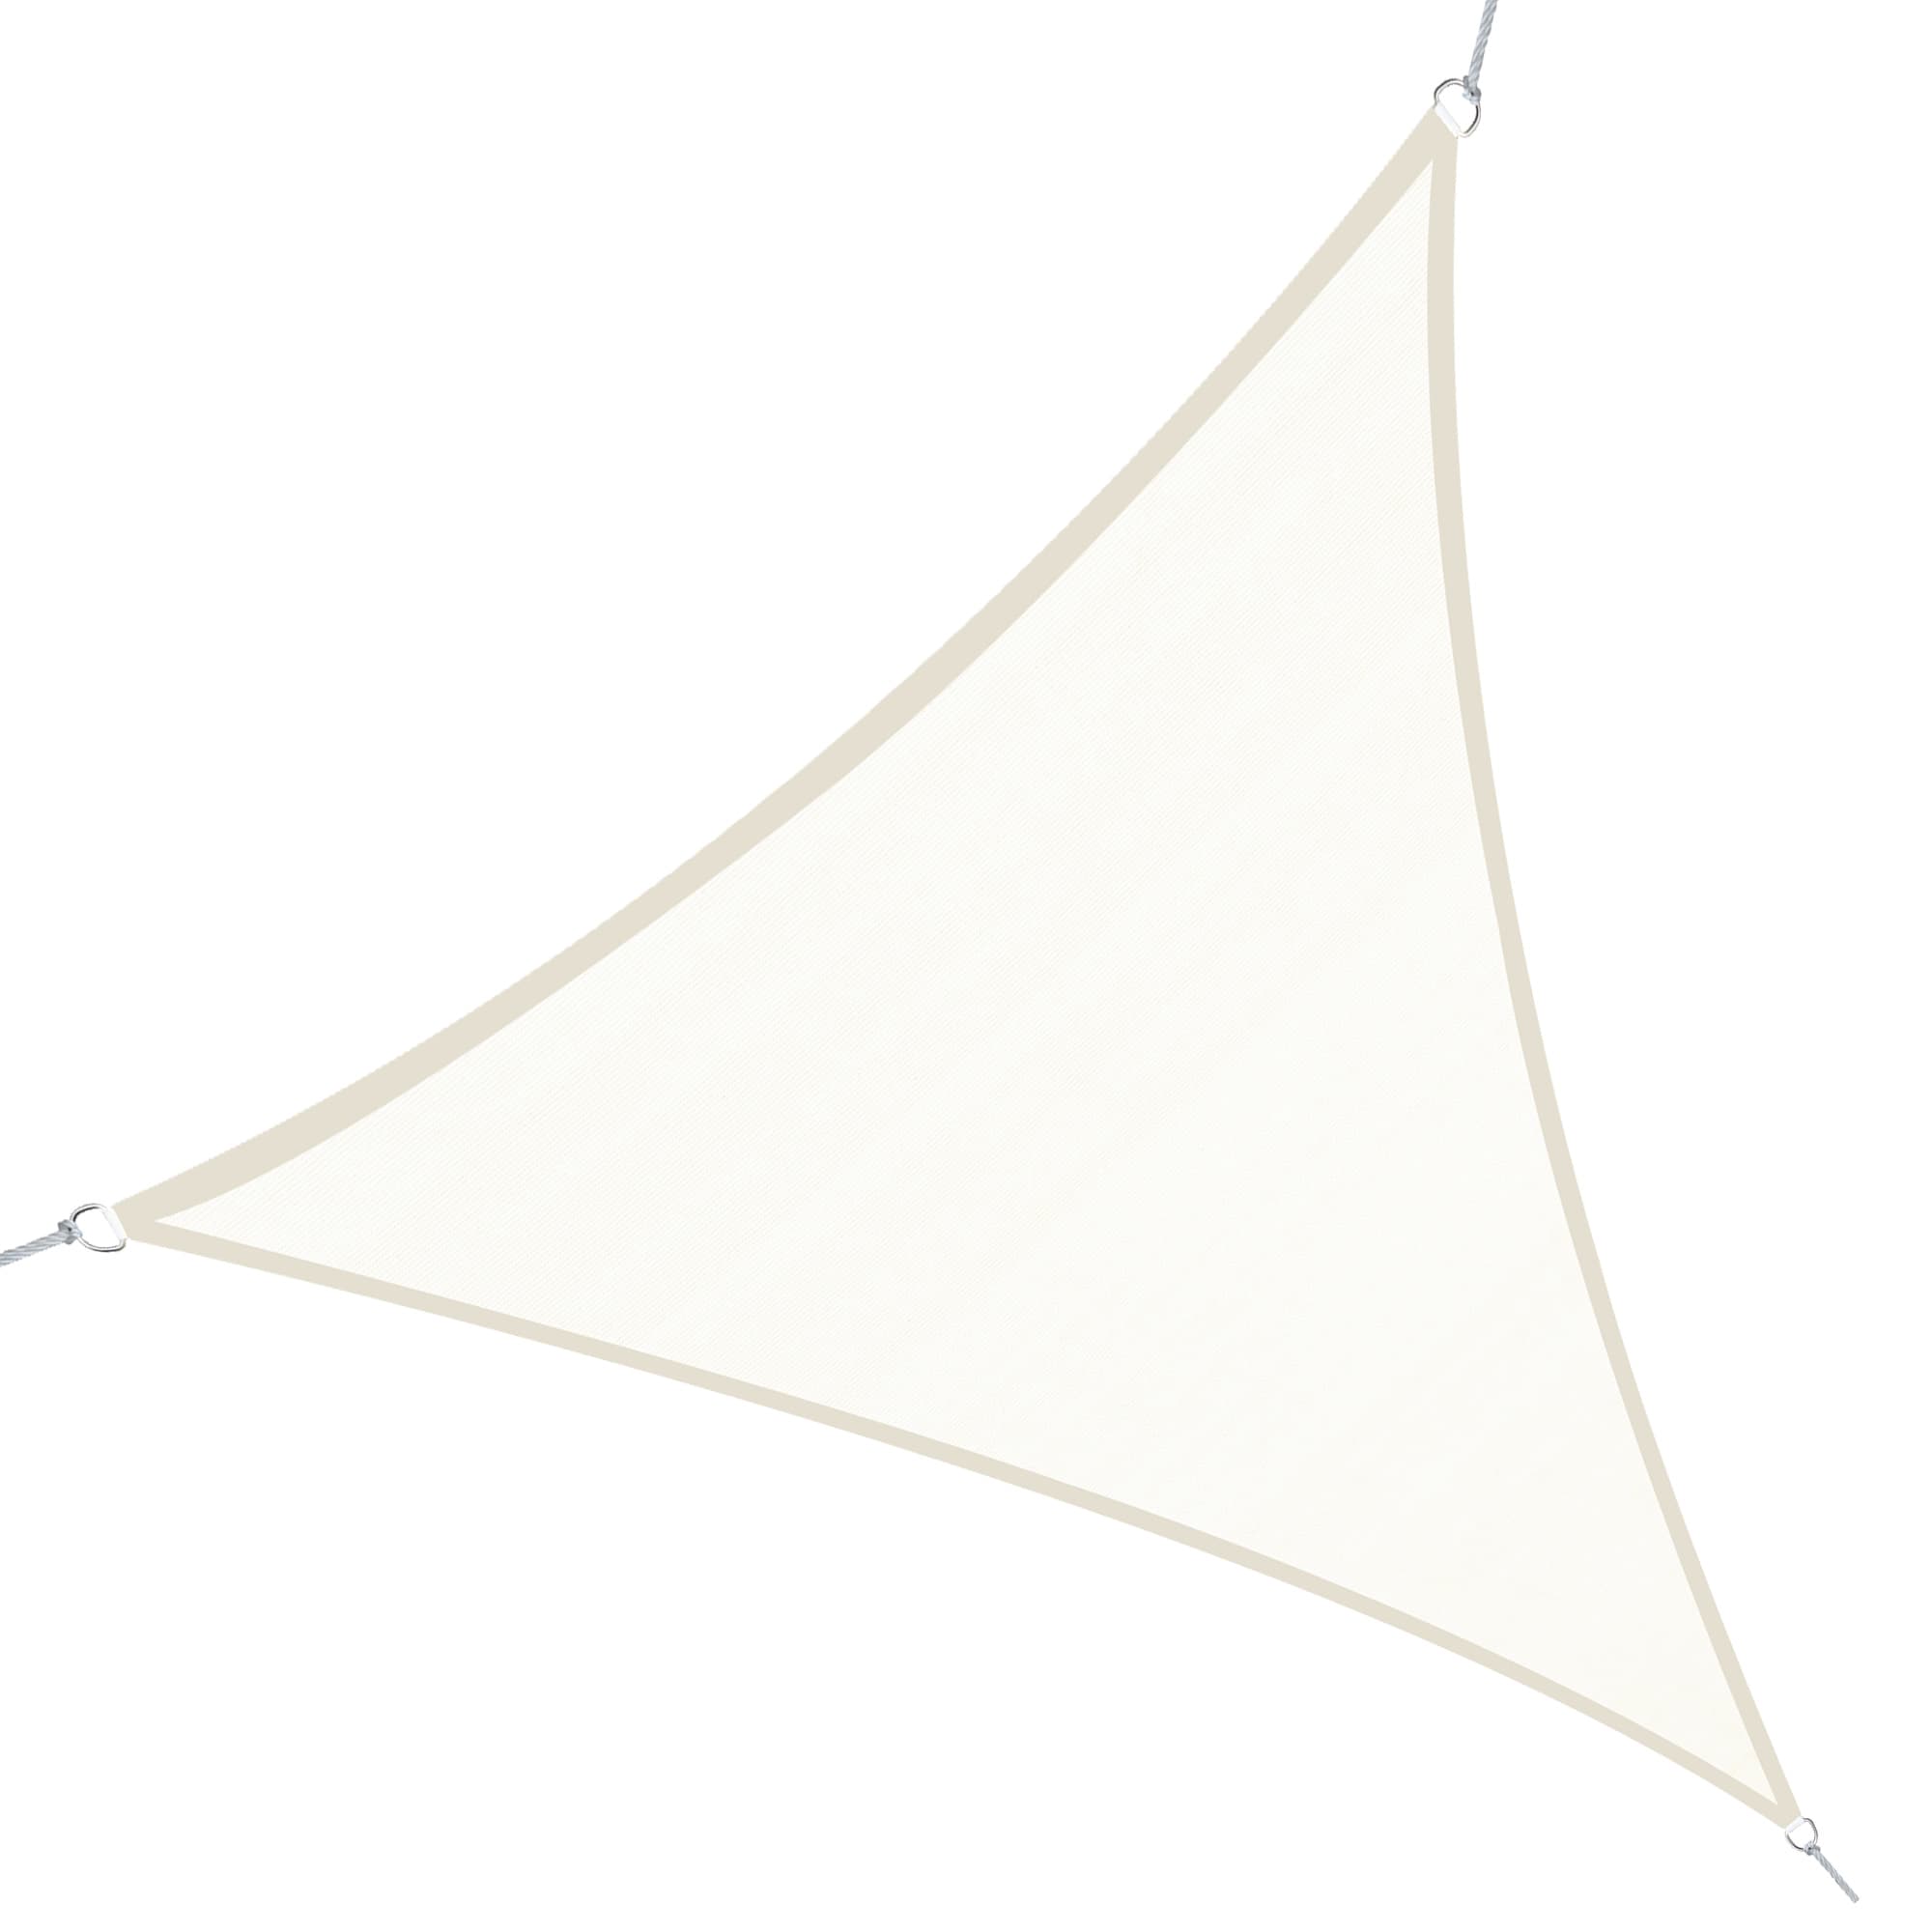 Toldo vela triangular color blanco + kit de instalación